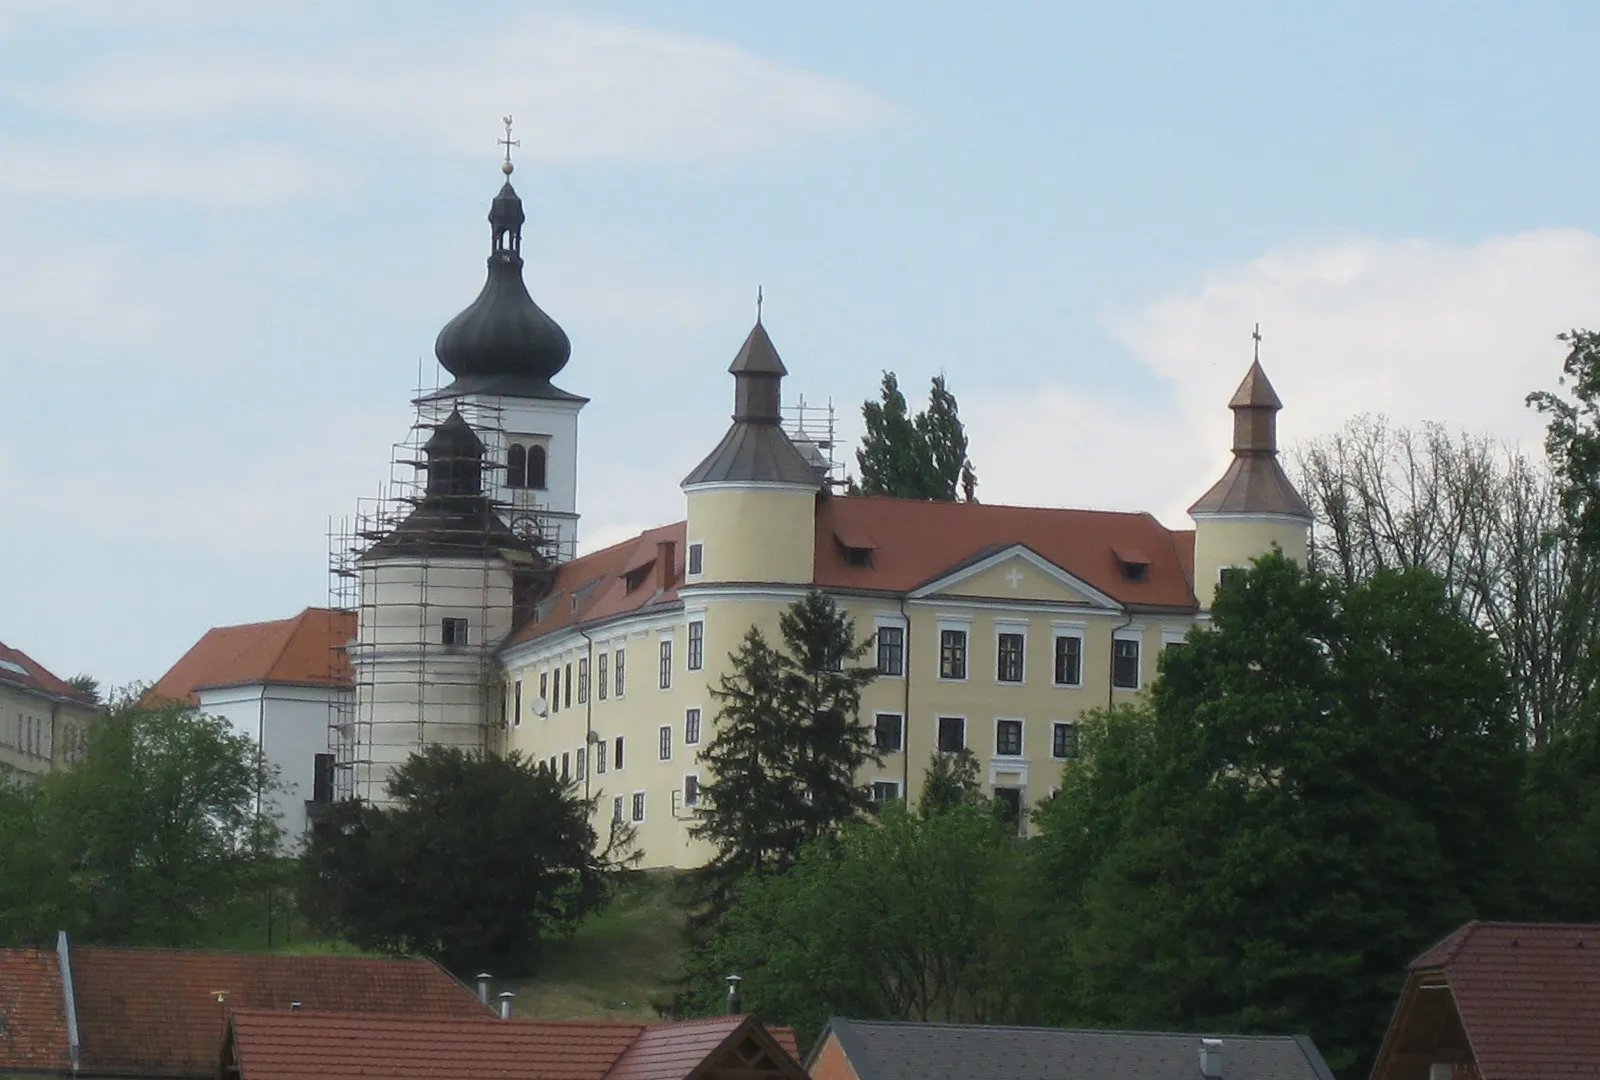 Photo showing: Velika Nedelja, village and castle/church in Slovenia